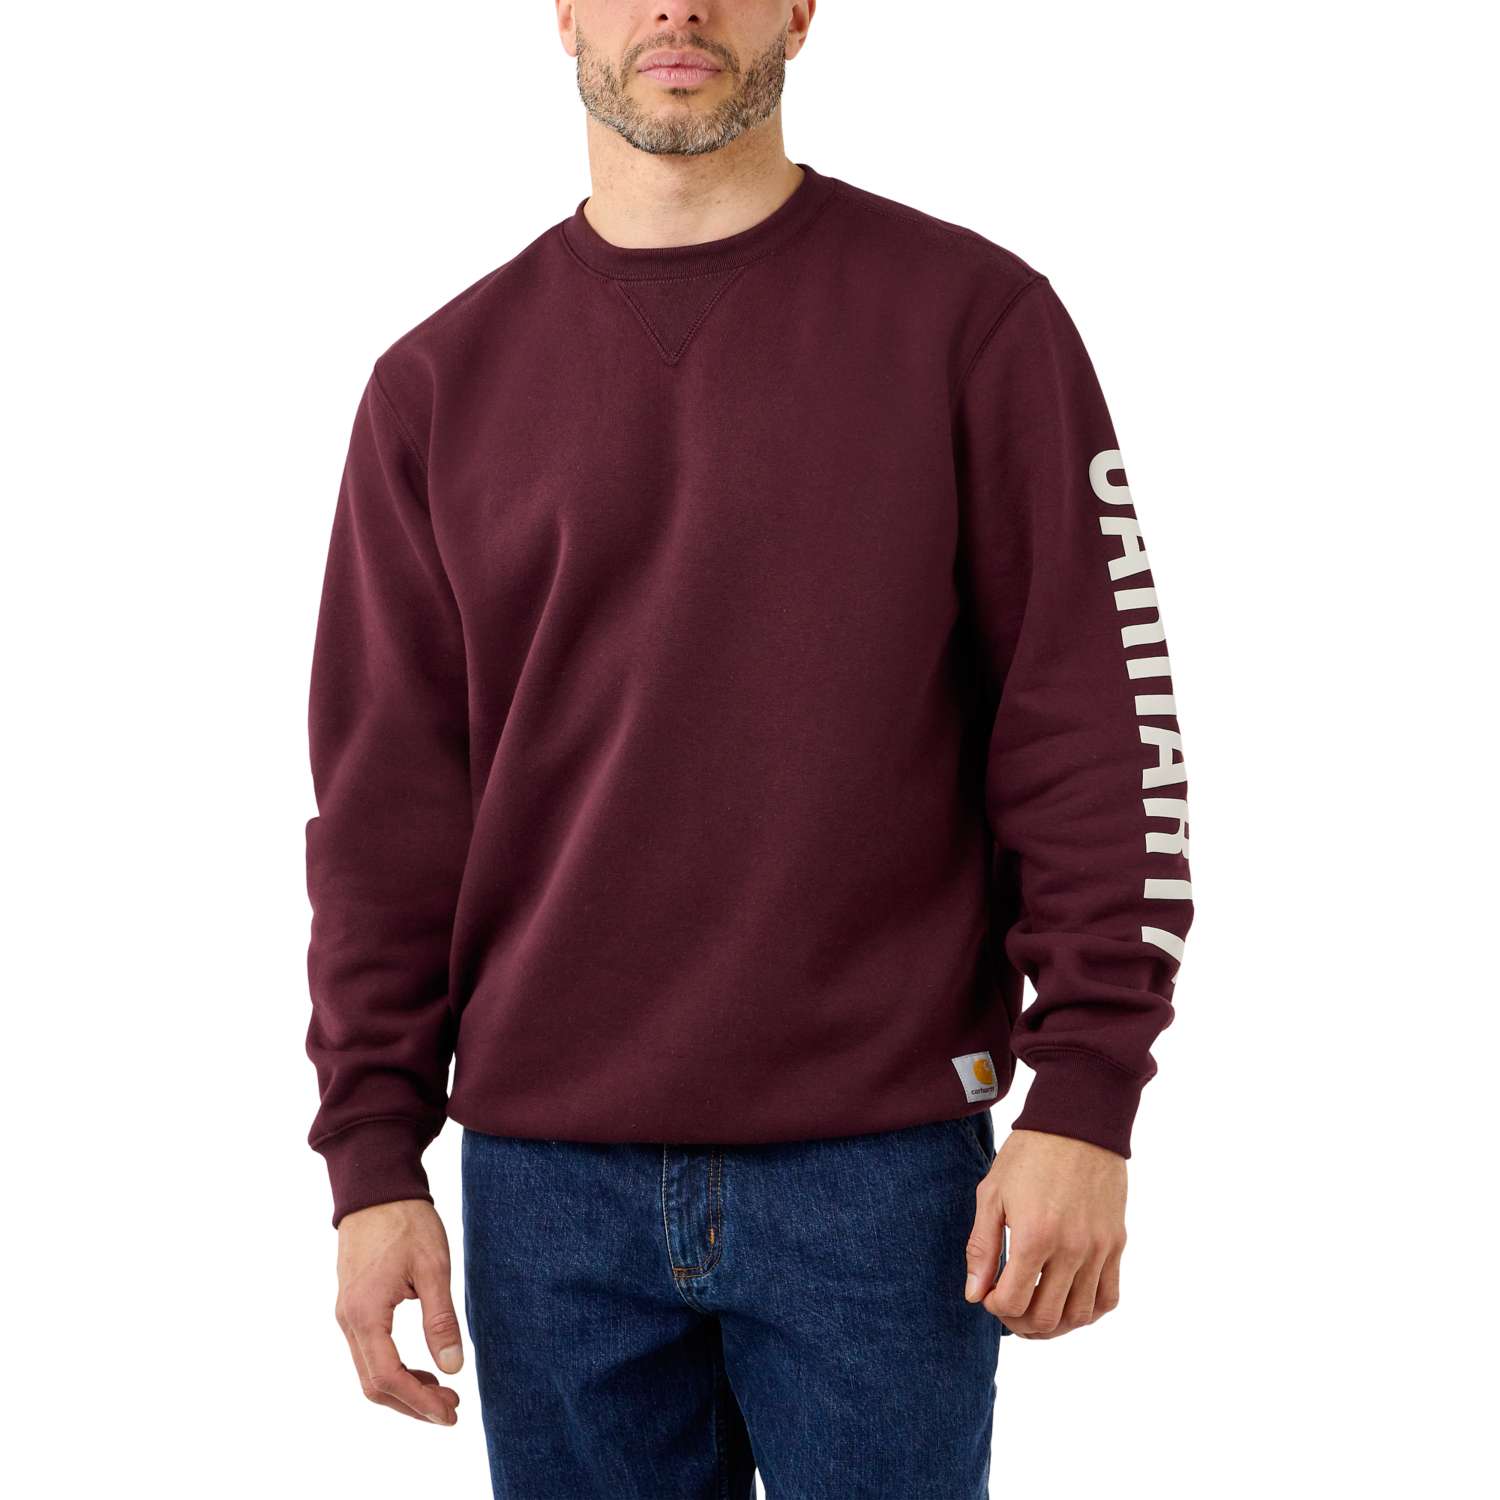 carhartt® Herren-Sweatshirt »CREWNECK GRAPHIC LOGO SWEATSHIRT« - Gr. L, port - erhältlich bei ☆ HUG Technik ✓